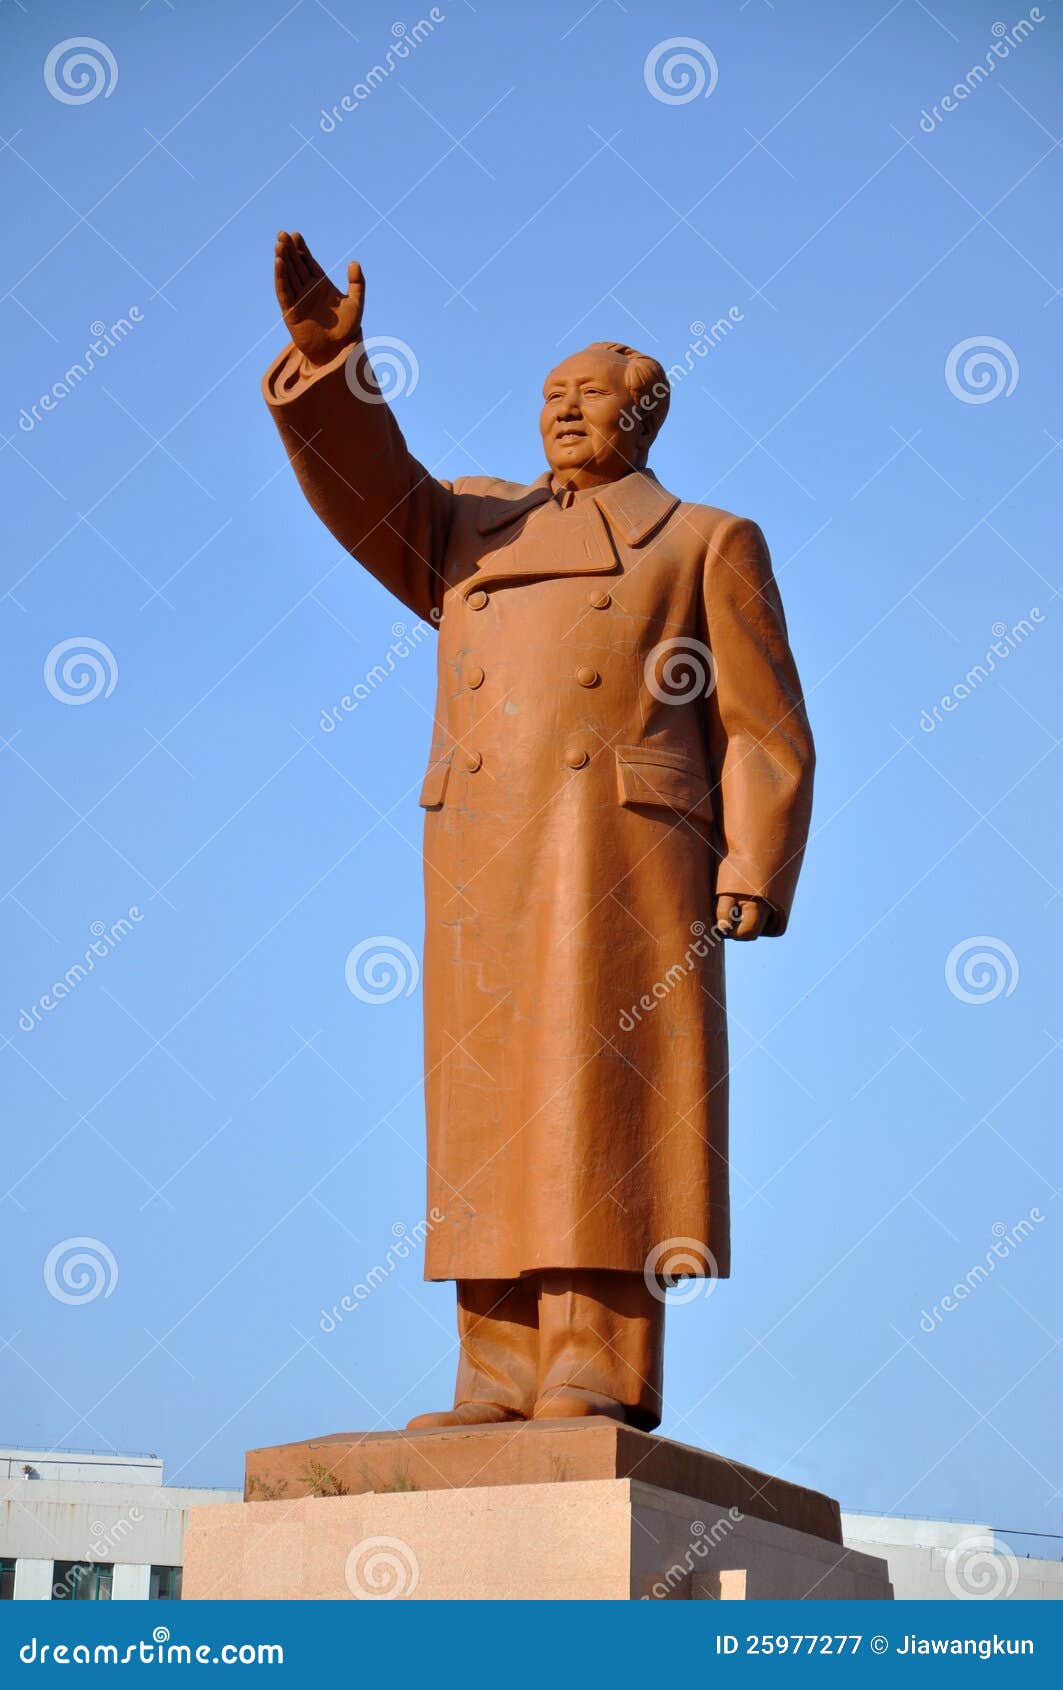 chairman mao statue, shenyang, china